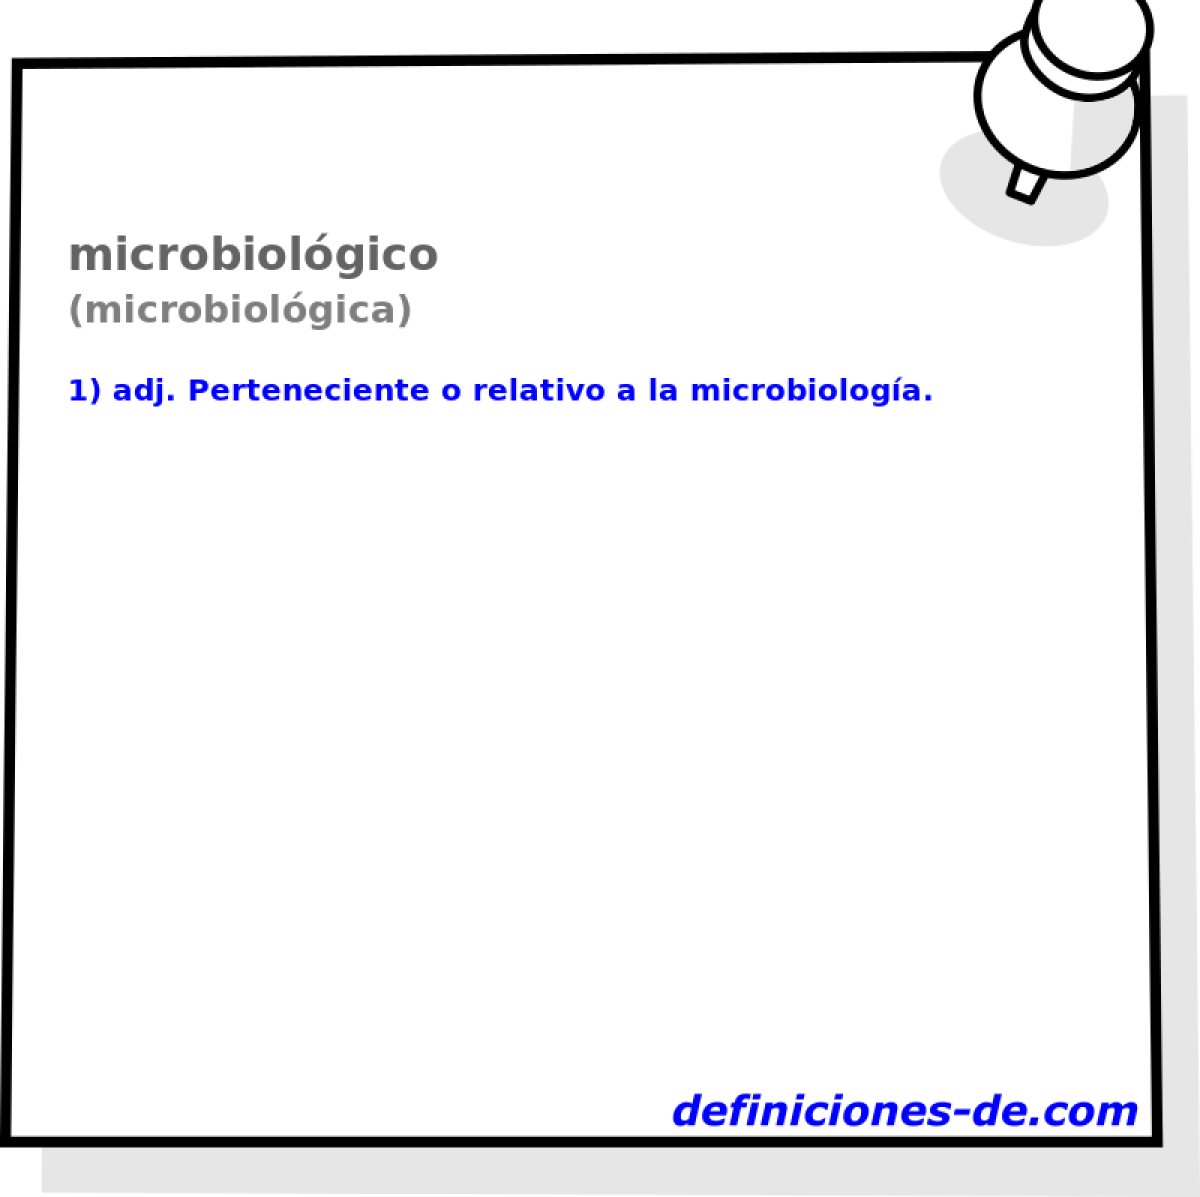 microbiolgico (microbiolgica)